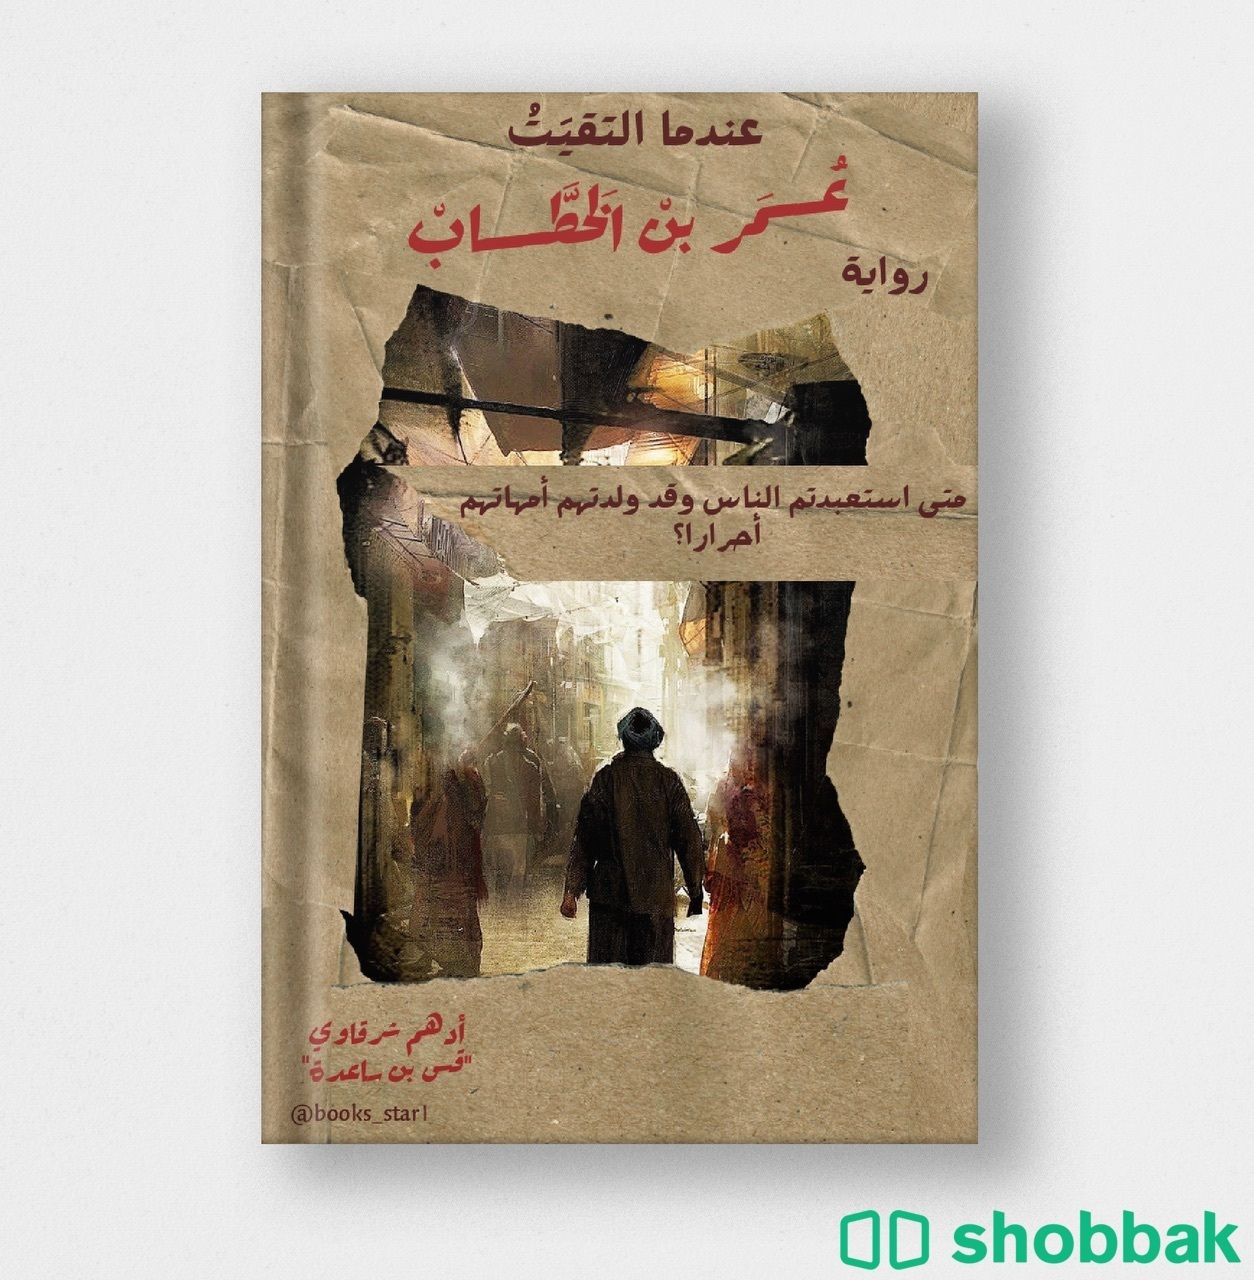 غلاف كتاب Shobbak Saudi Arabia